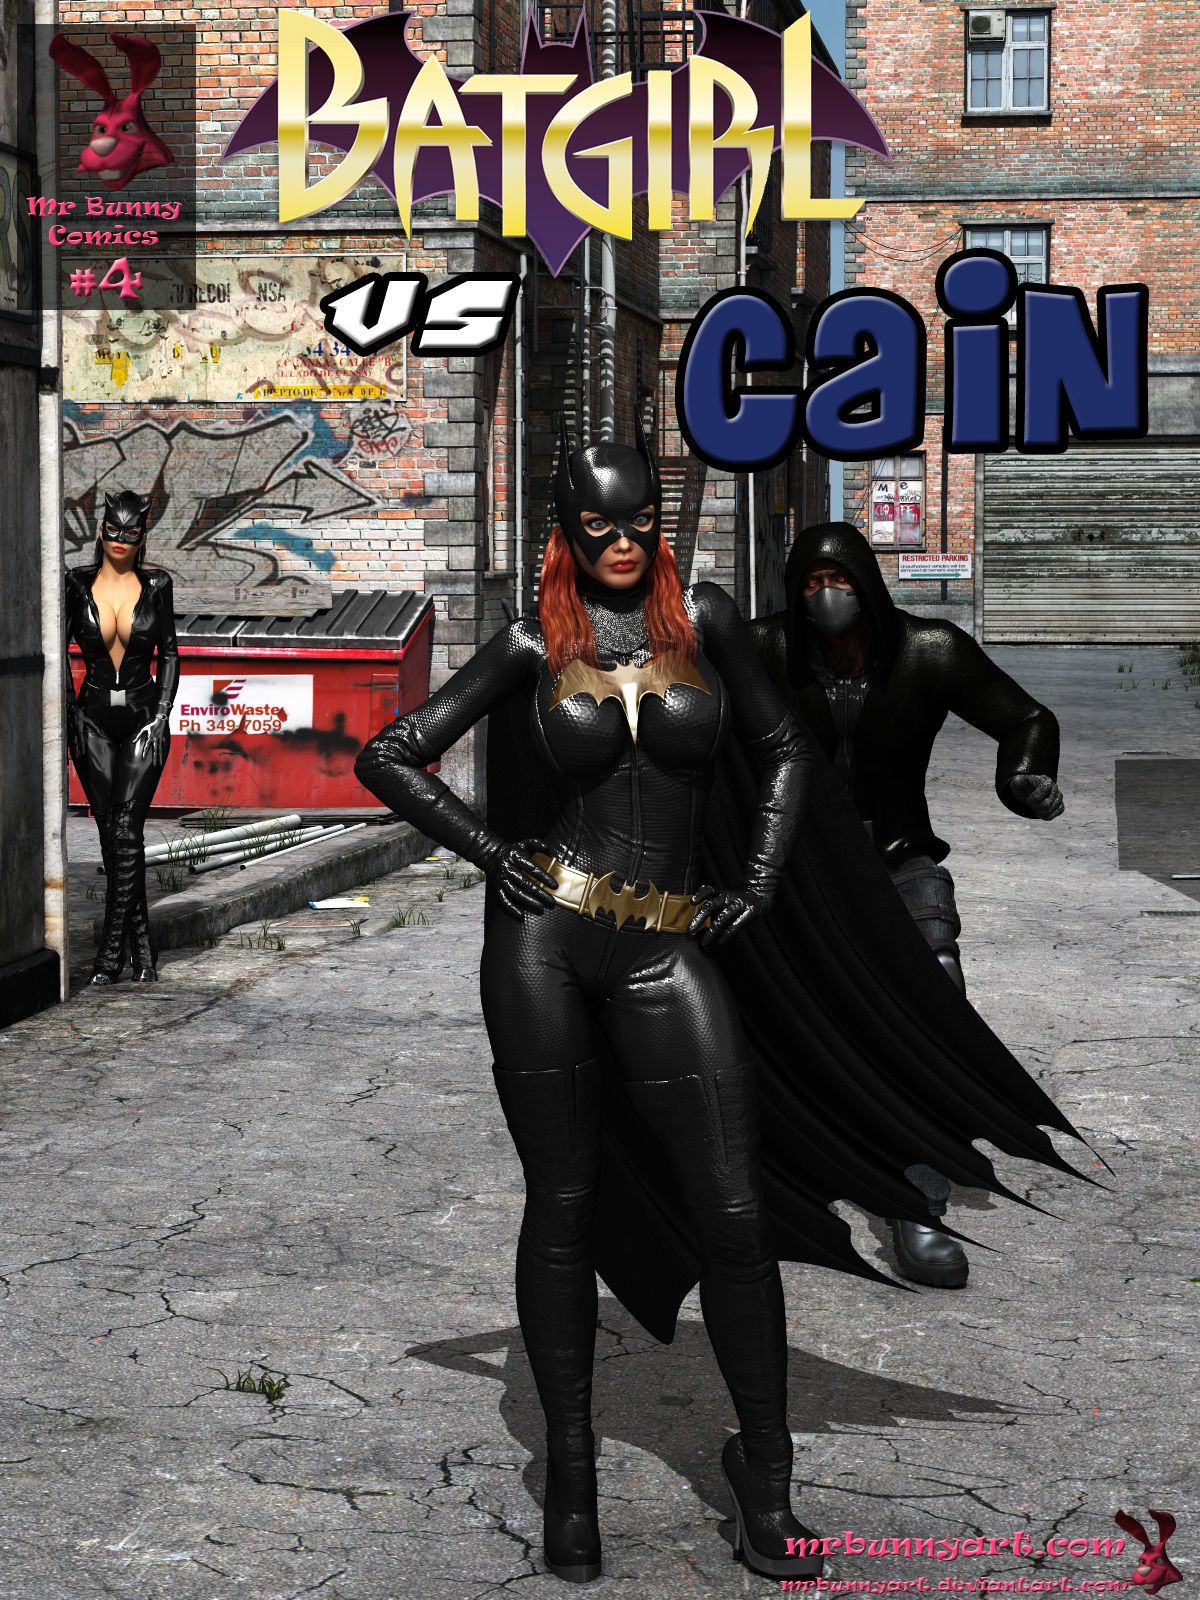 Batgirl vs Kaïn